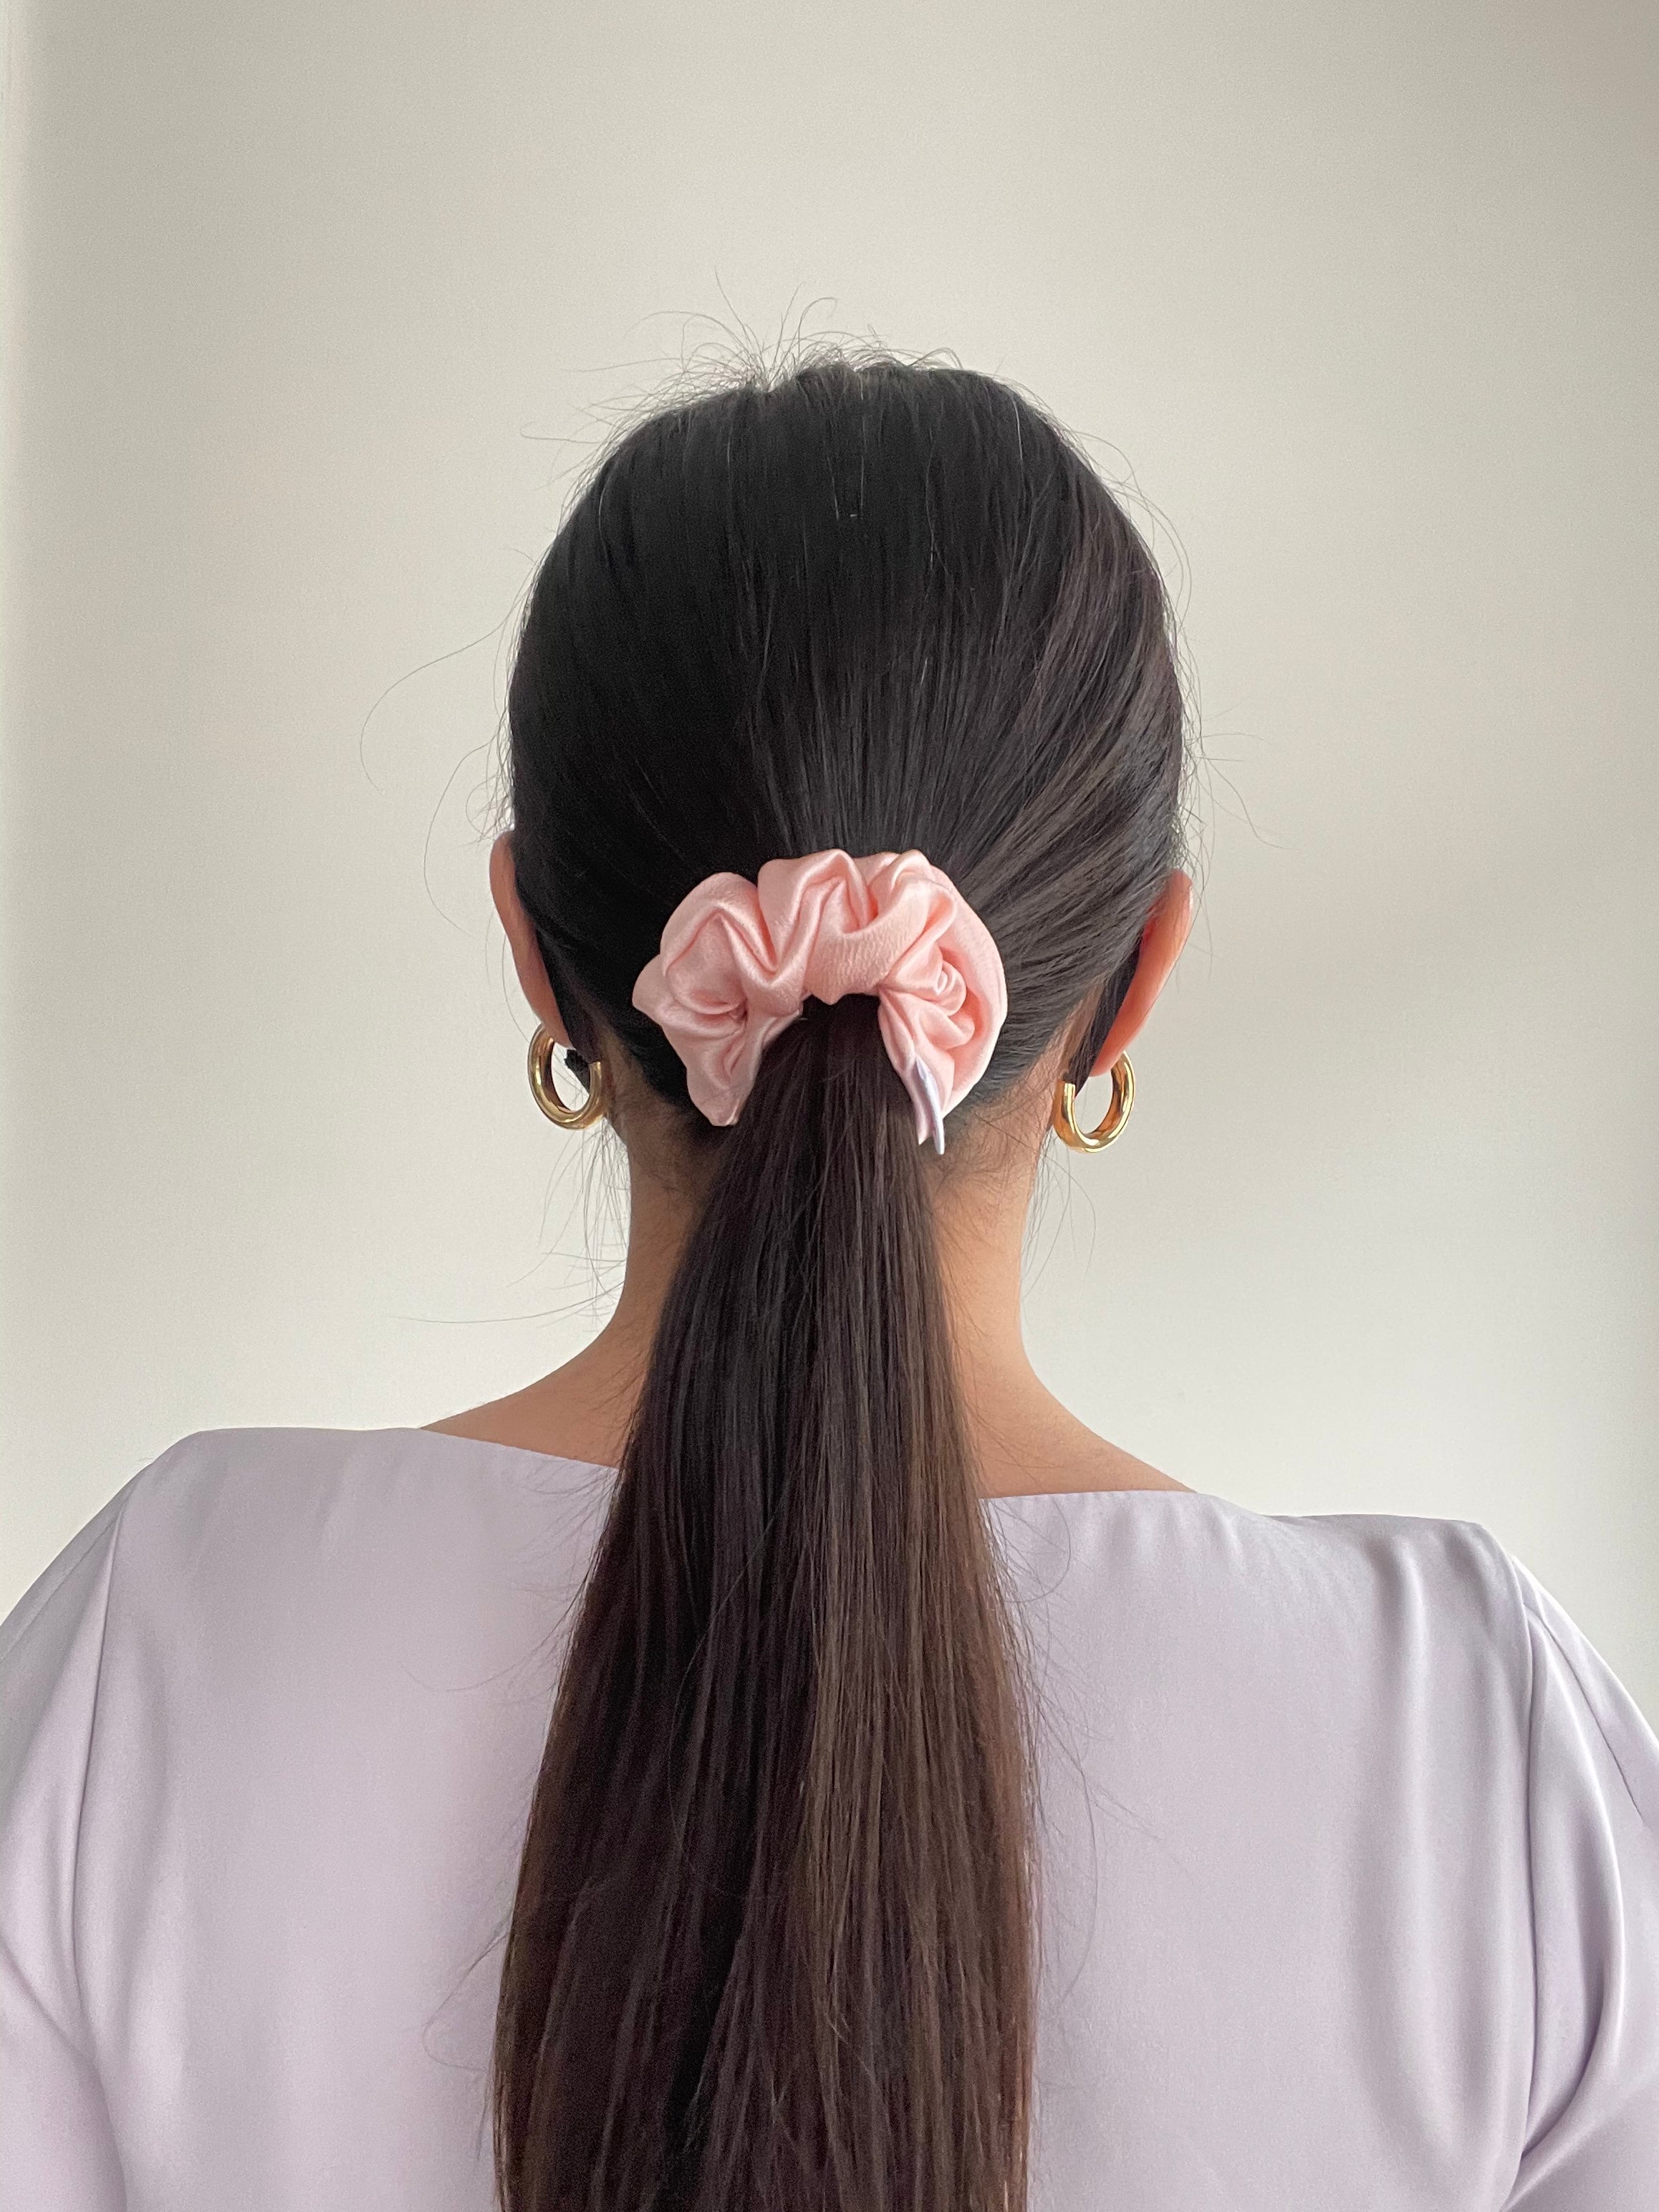 thin Petal Pink Silk Scrunchie in model's hair